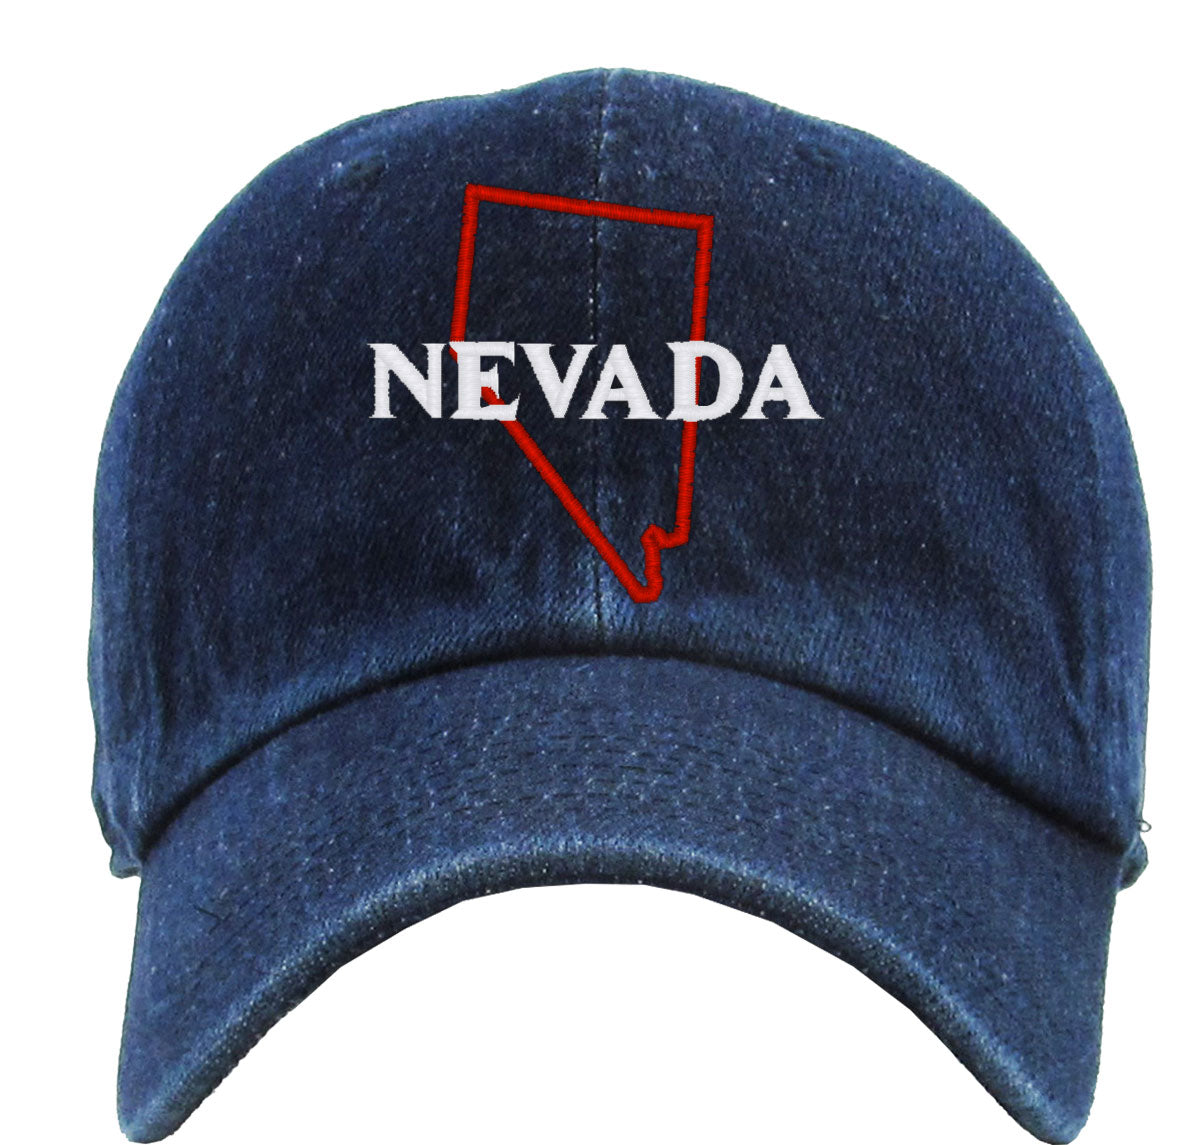 Nevada Premium Baseball Cap